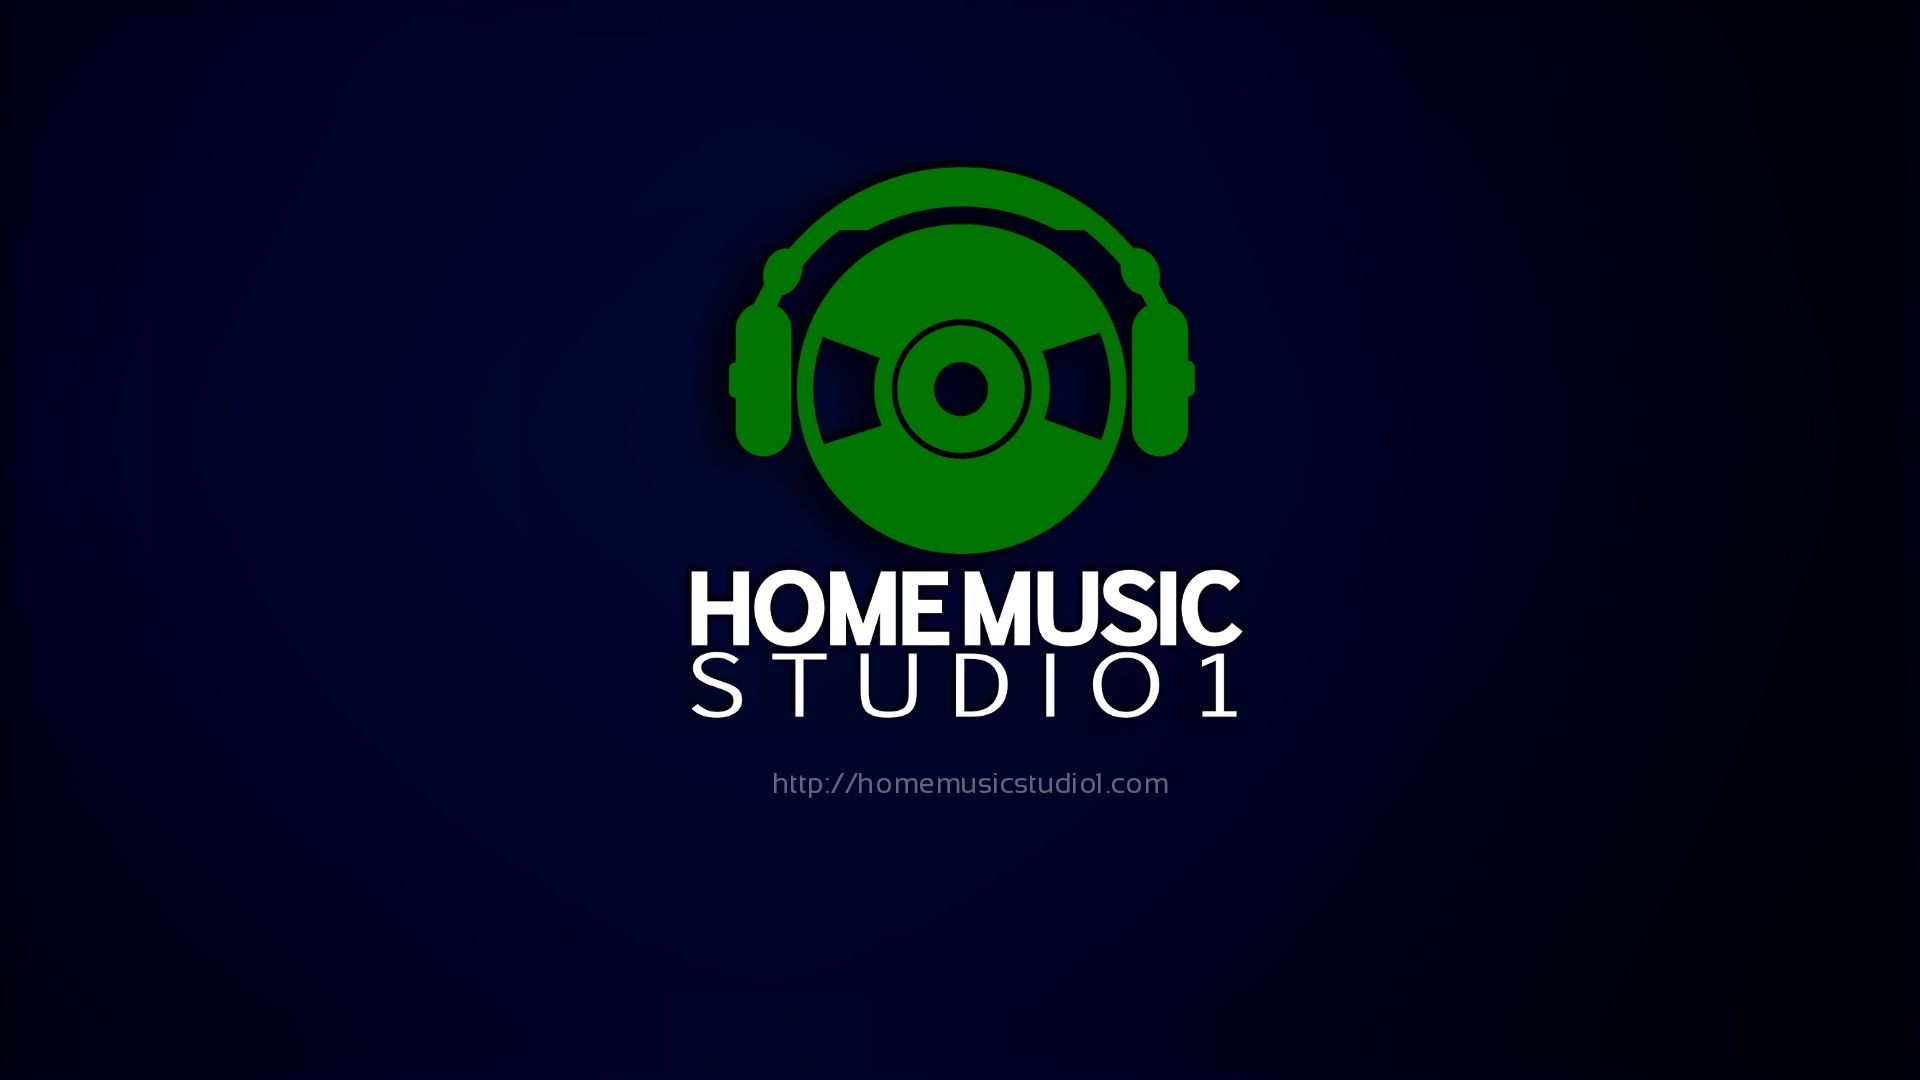 Free Home Music Studio 1 Wallpapers – Home Music Studio 1